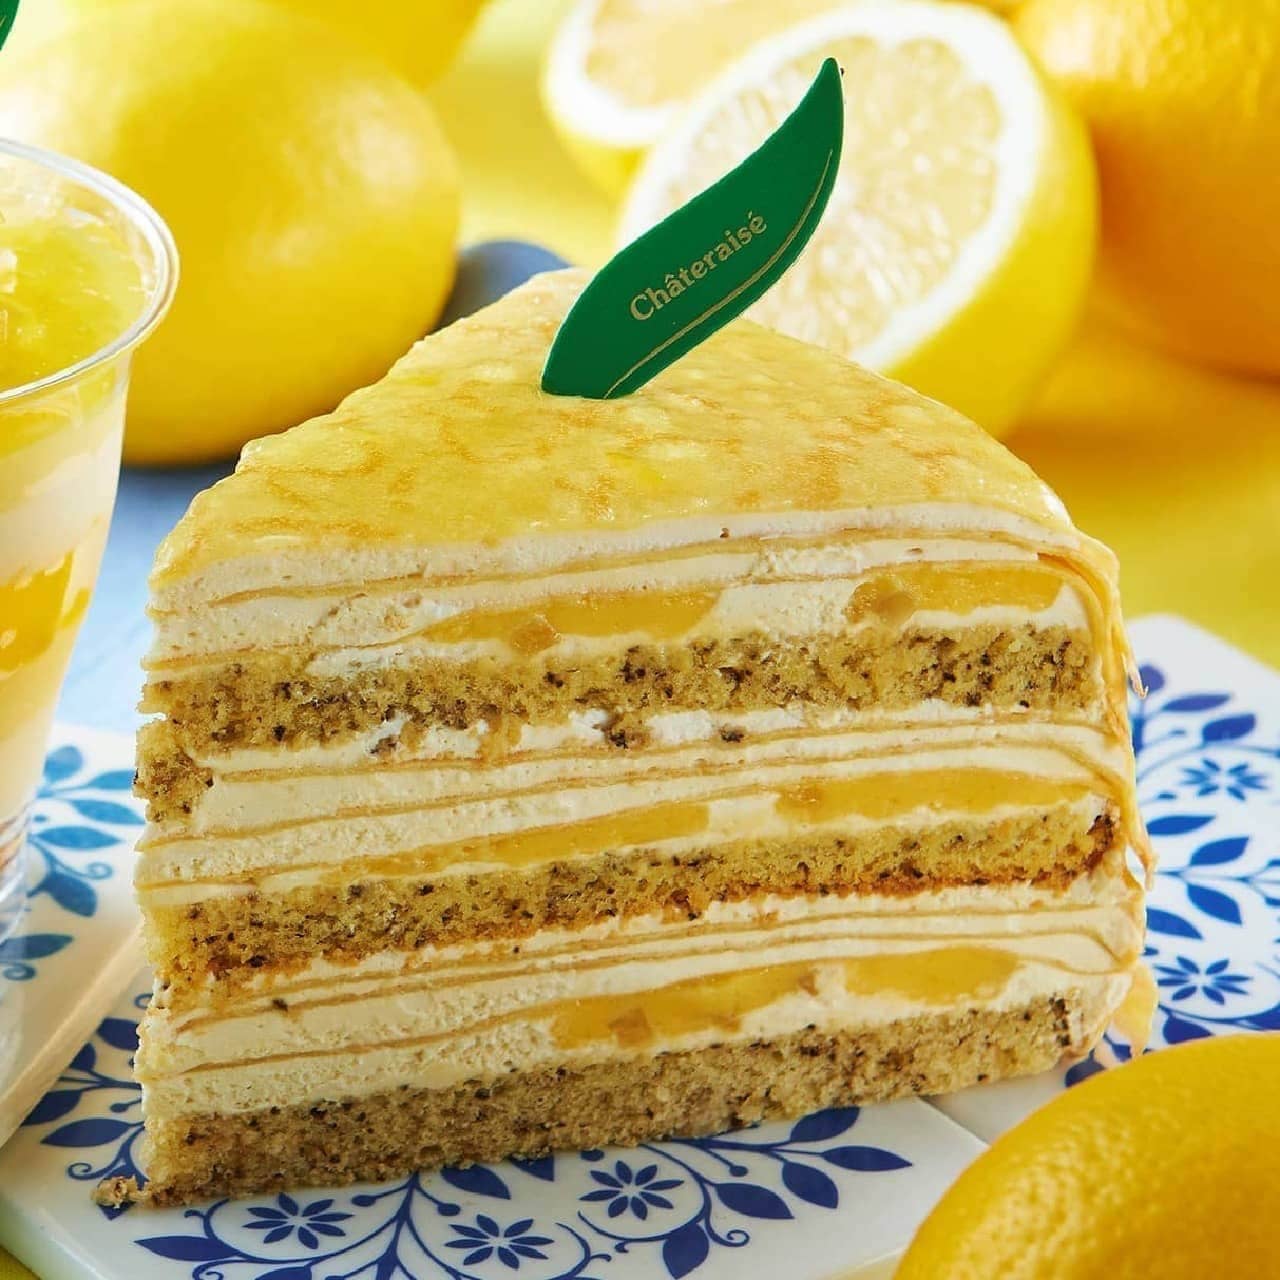 Shateraise "Setouchi Lemon and Black Tea Crepe Cake